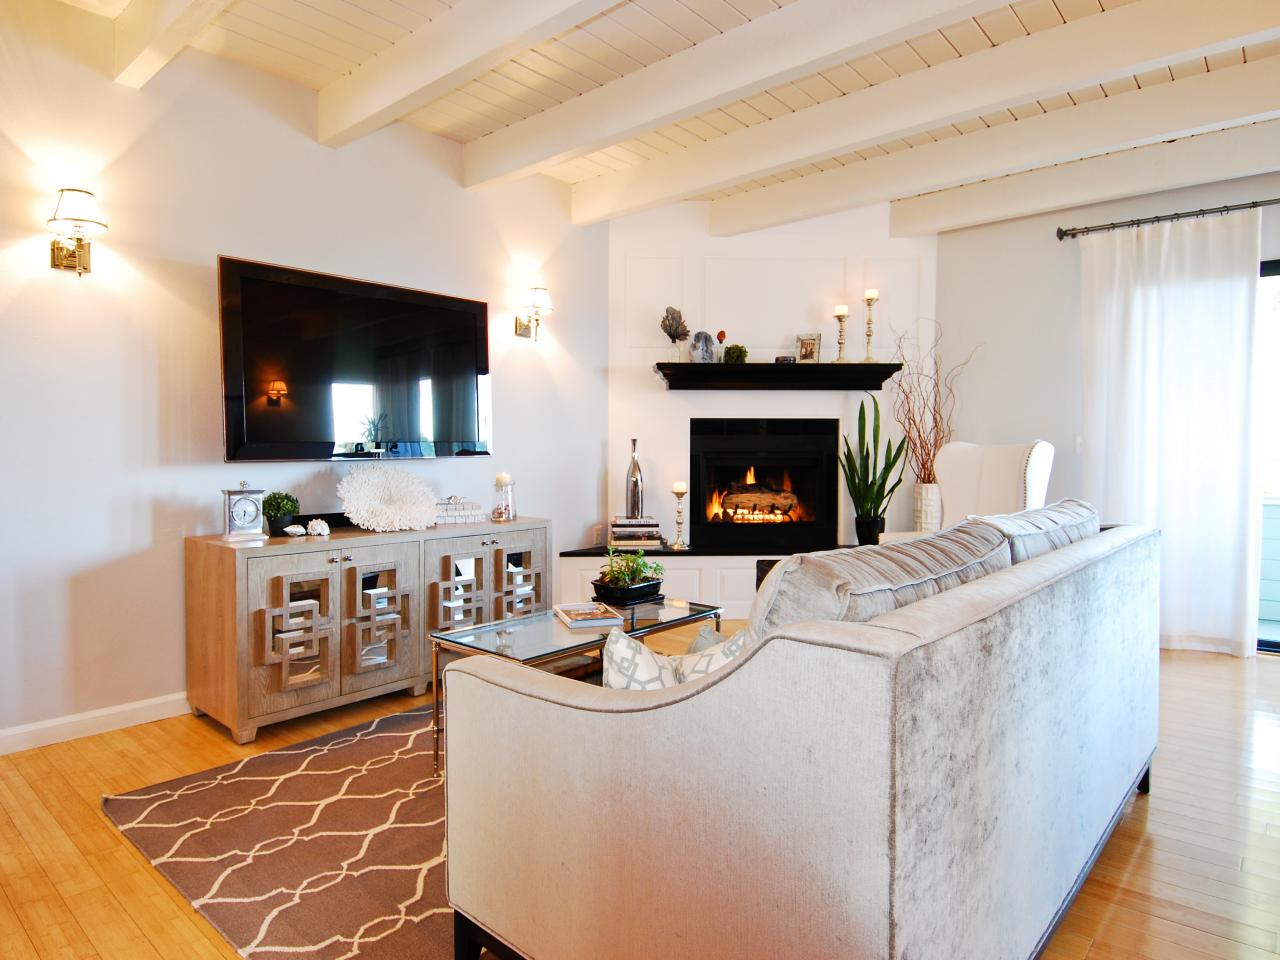 Living Room Ideas With Corner Fireplace Centerfieldbarcom